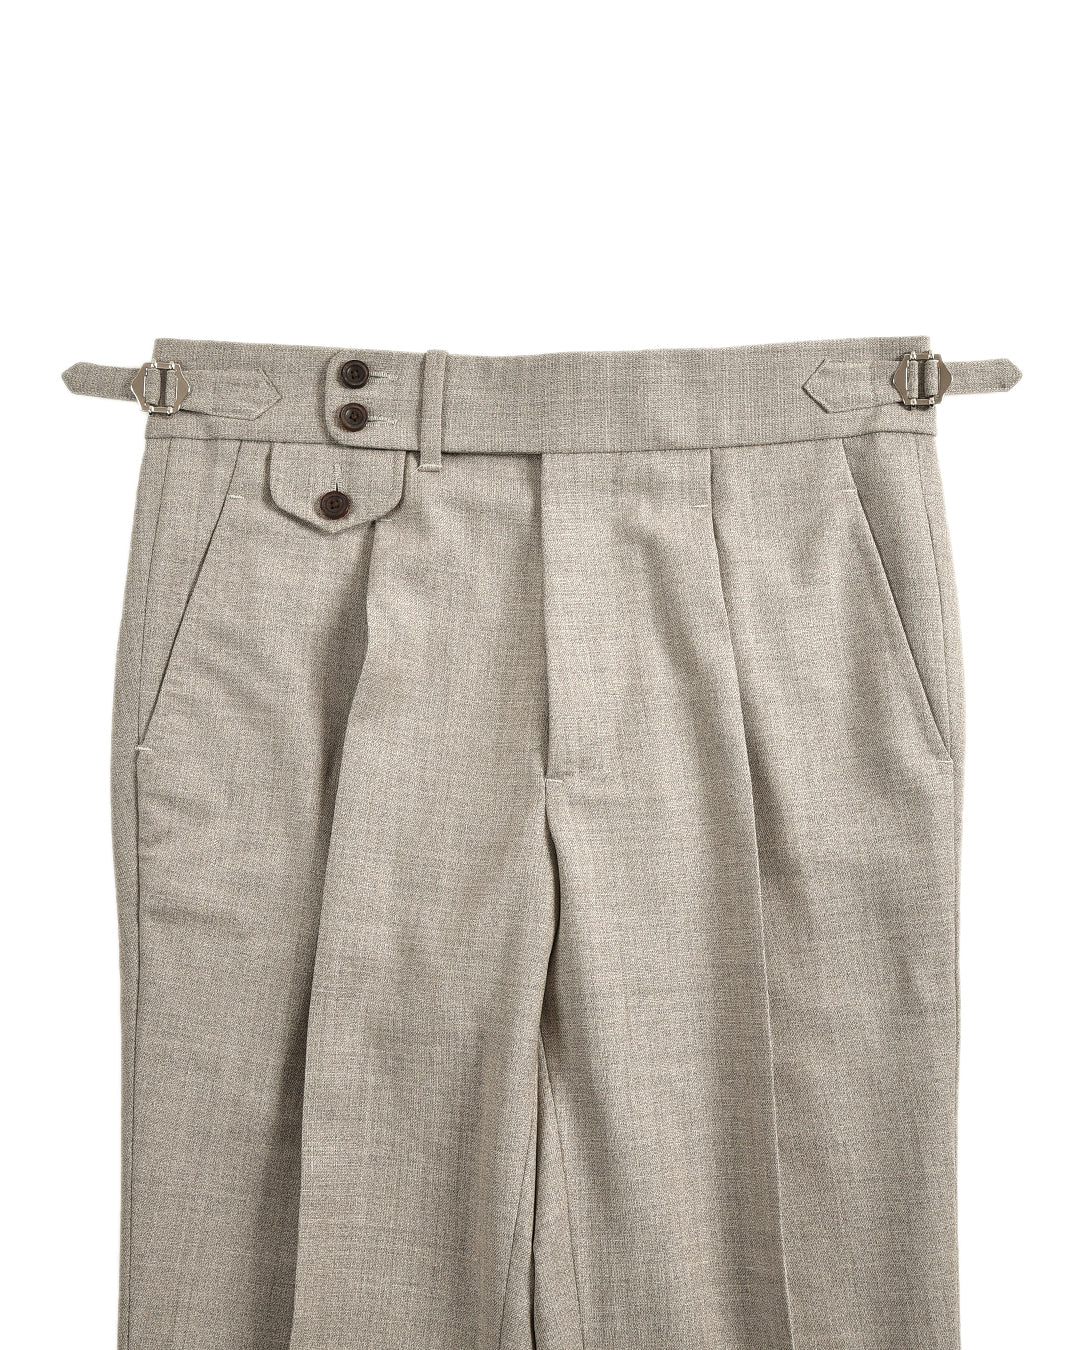 VBC - 4 Ply Tropical Wool: Grey Ecru Melange Pant